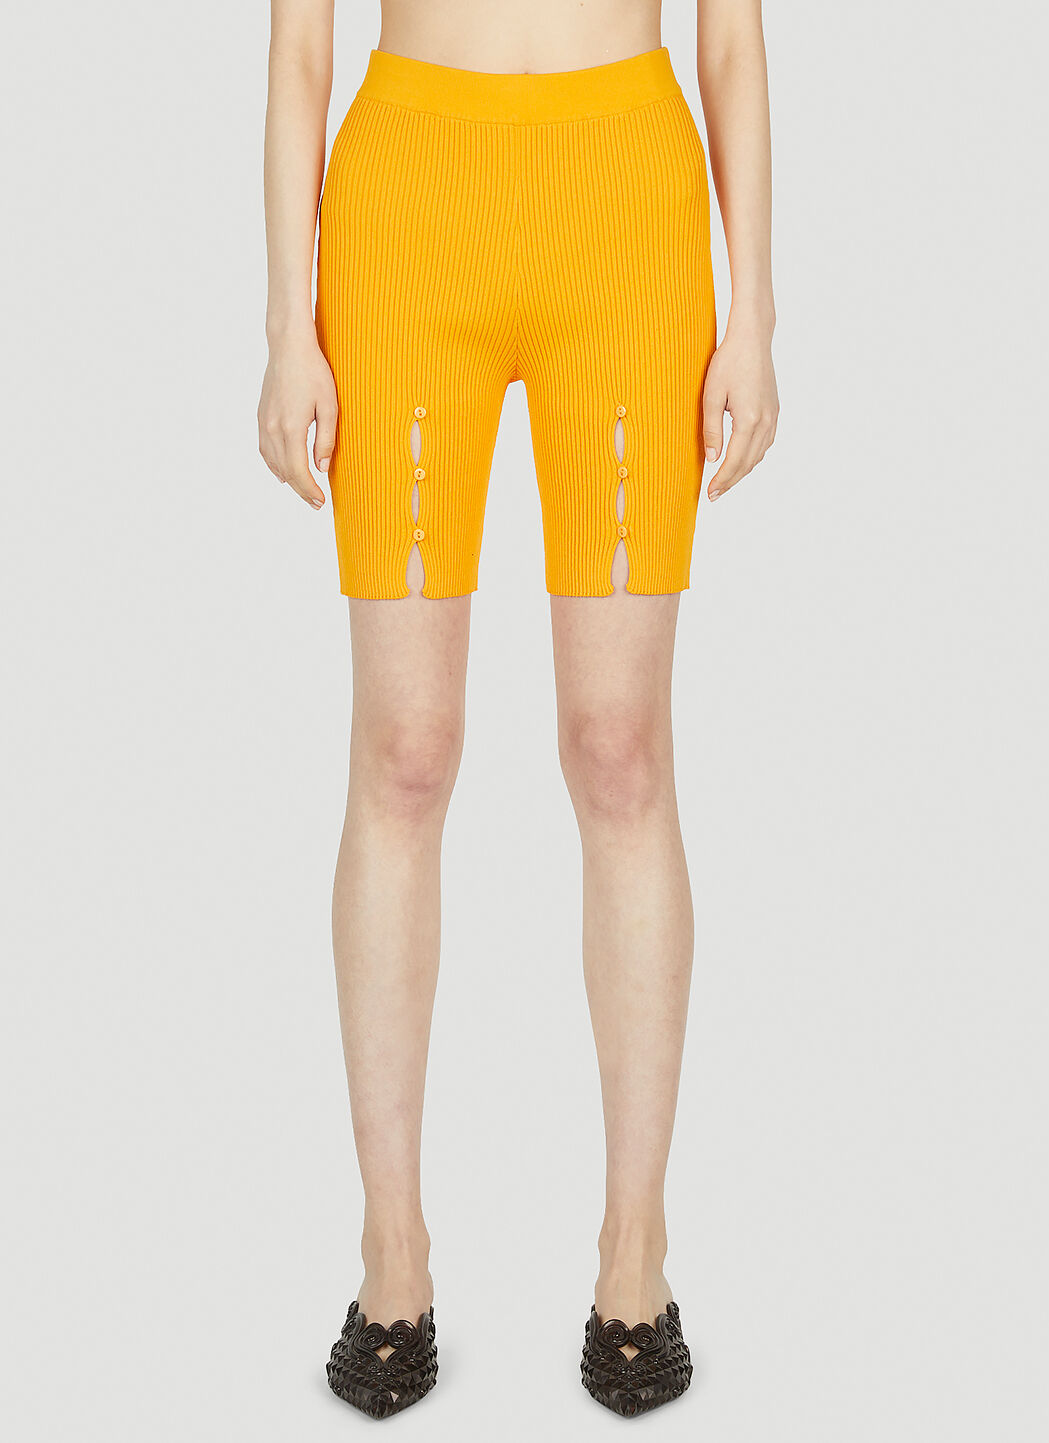 Ester Manas Knit Biker Shorts Orange est0252007